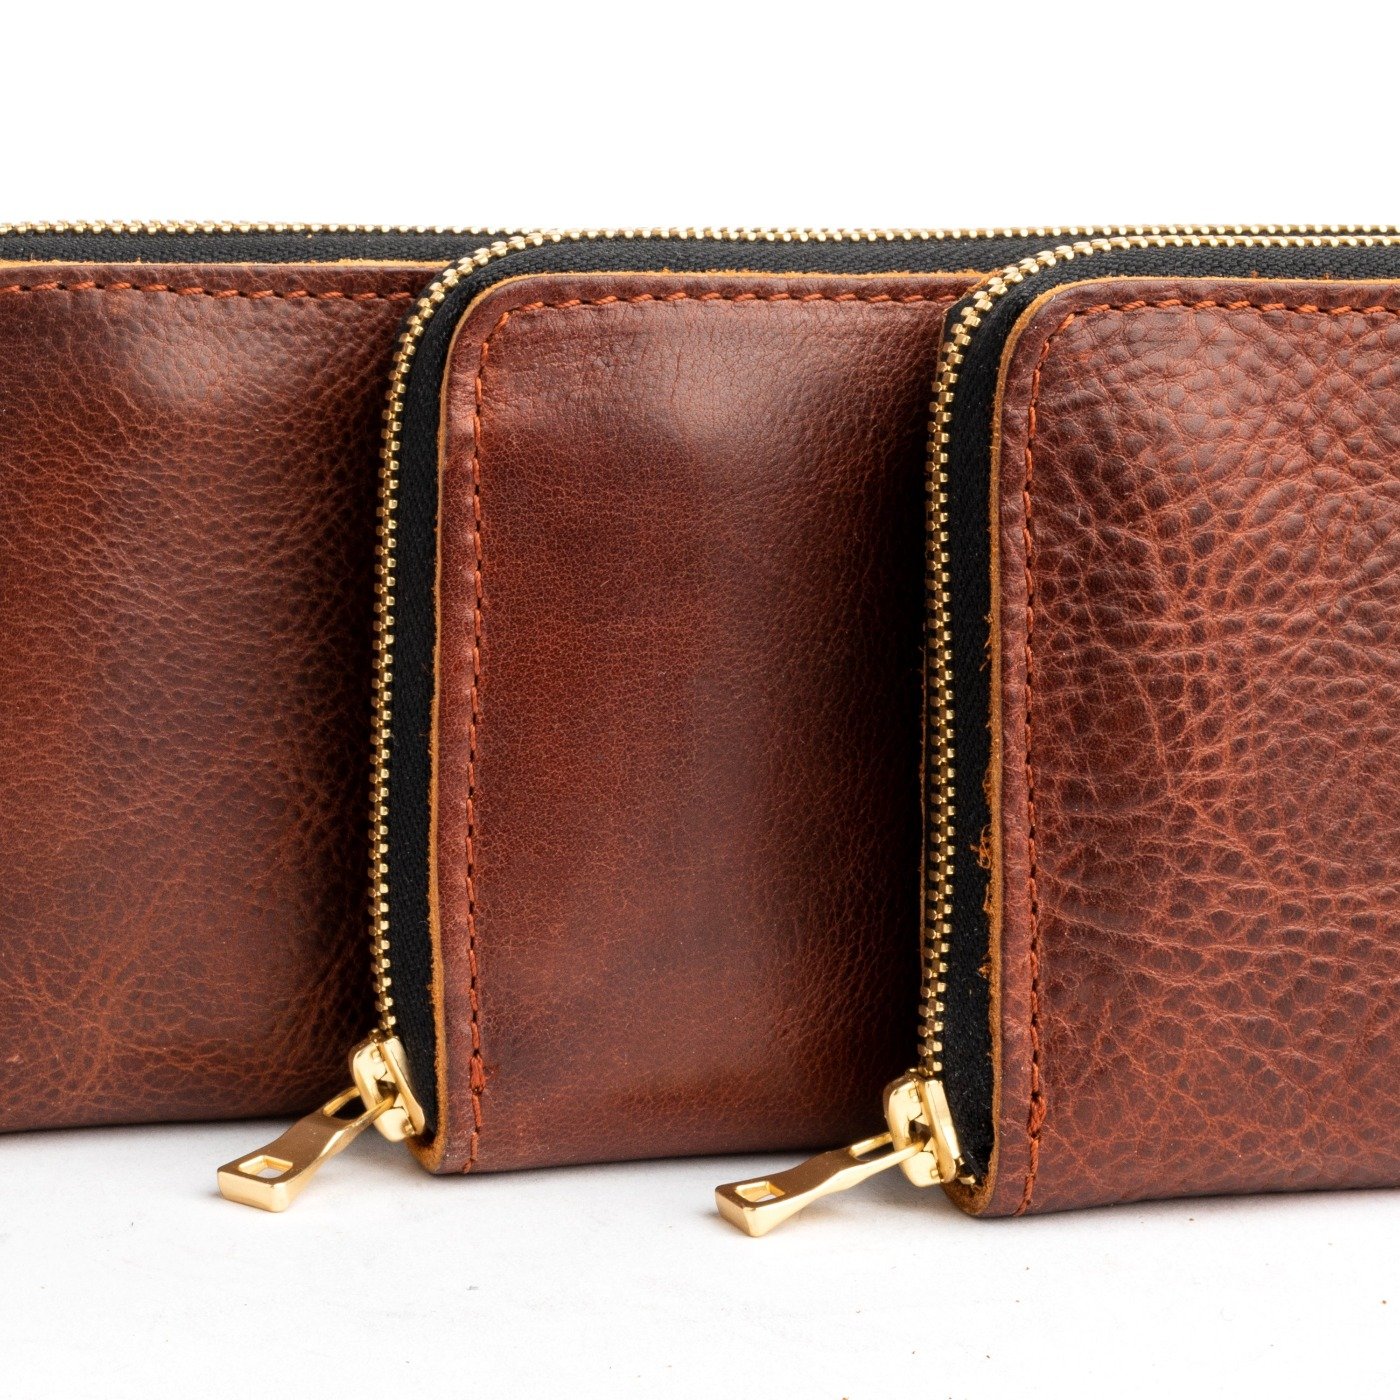 Black grained leather double zip wallet